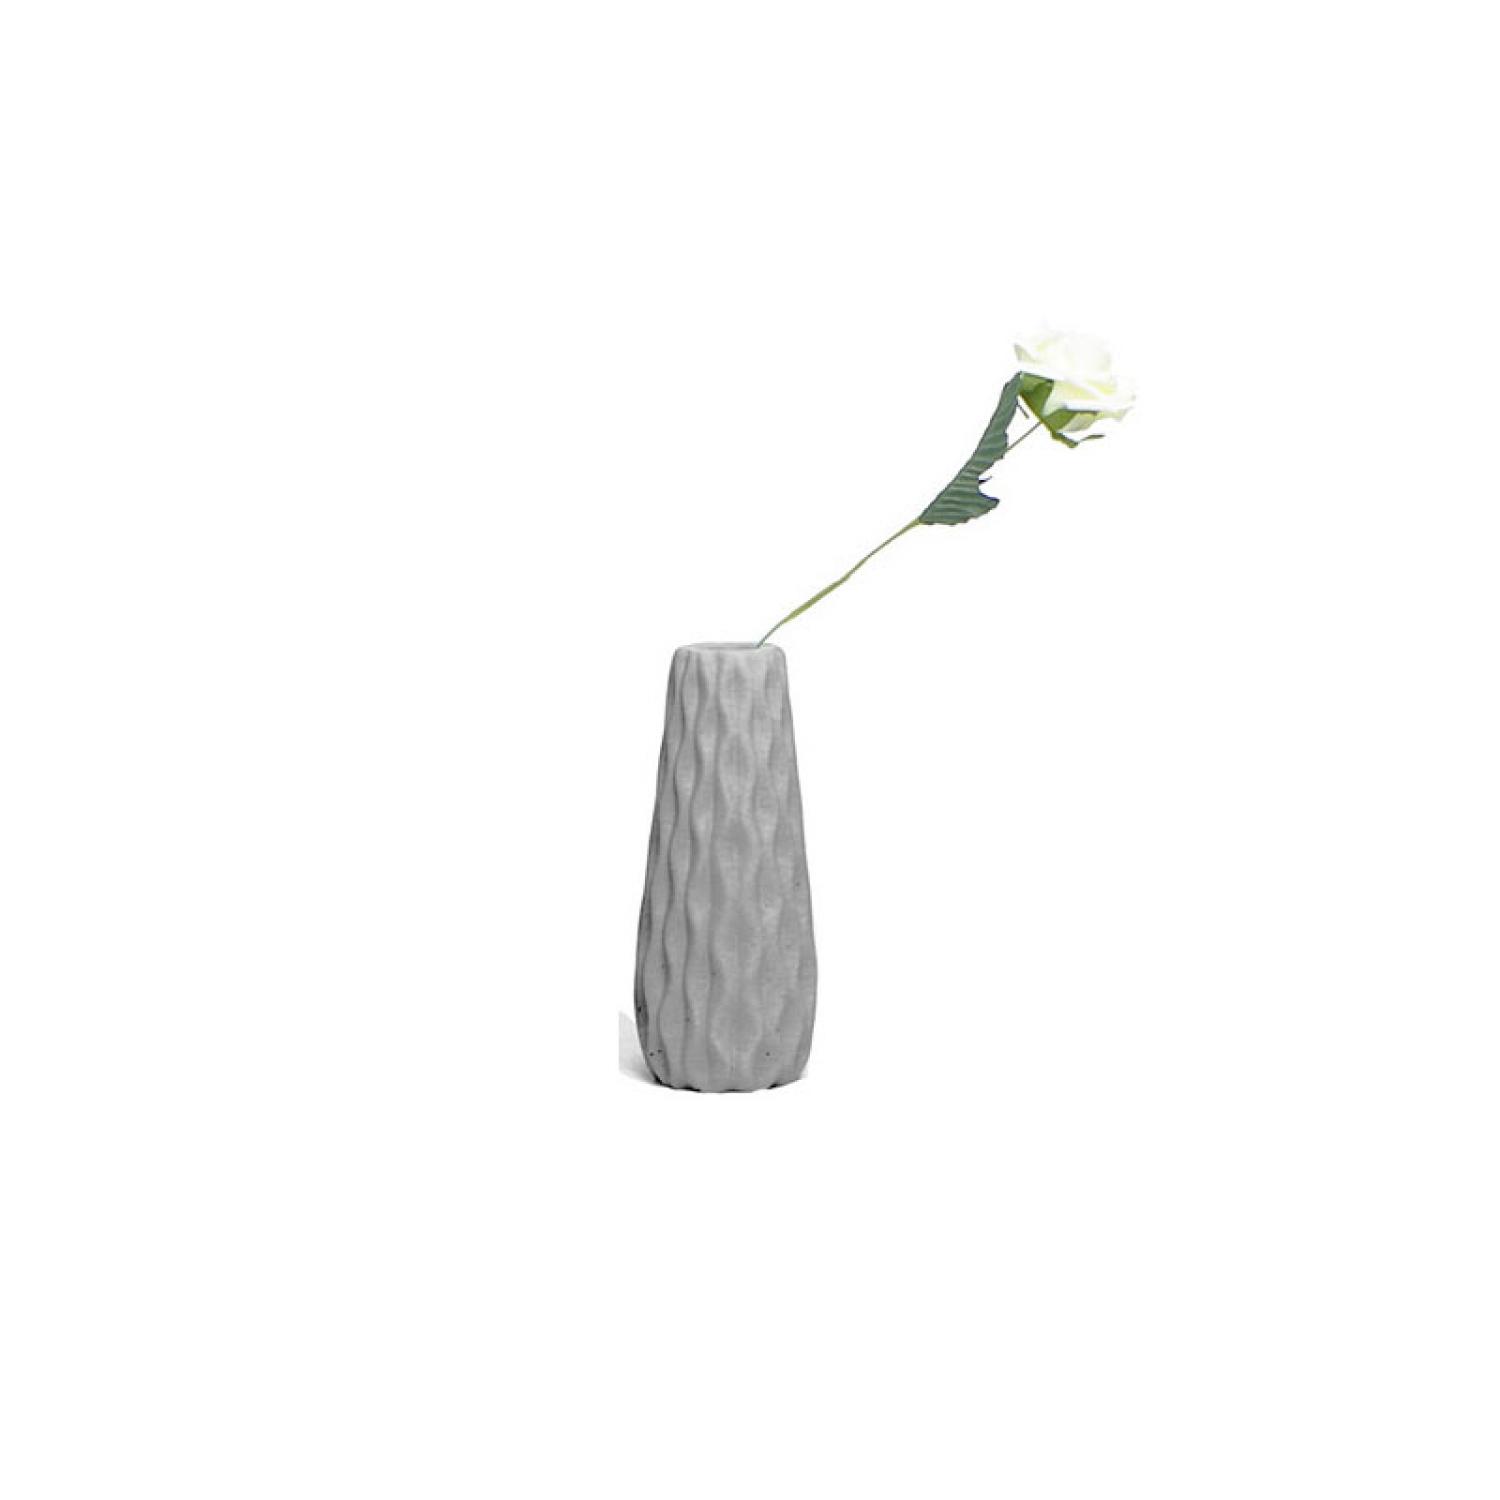 Cement flower vase decoration Vase